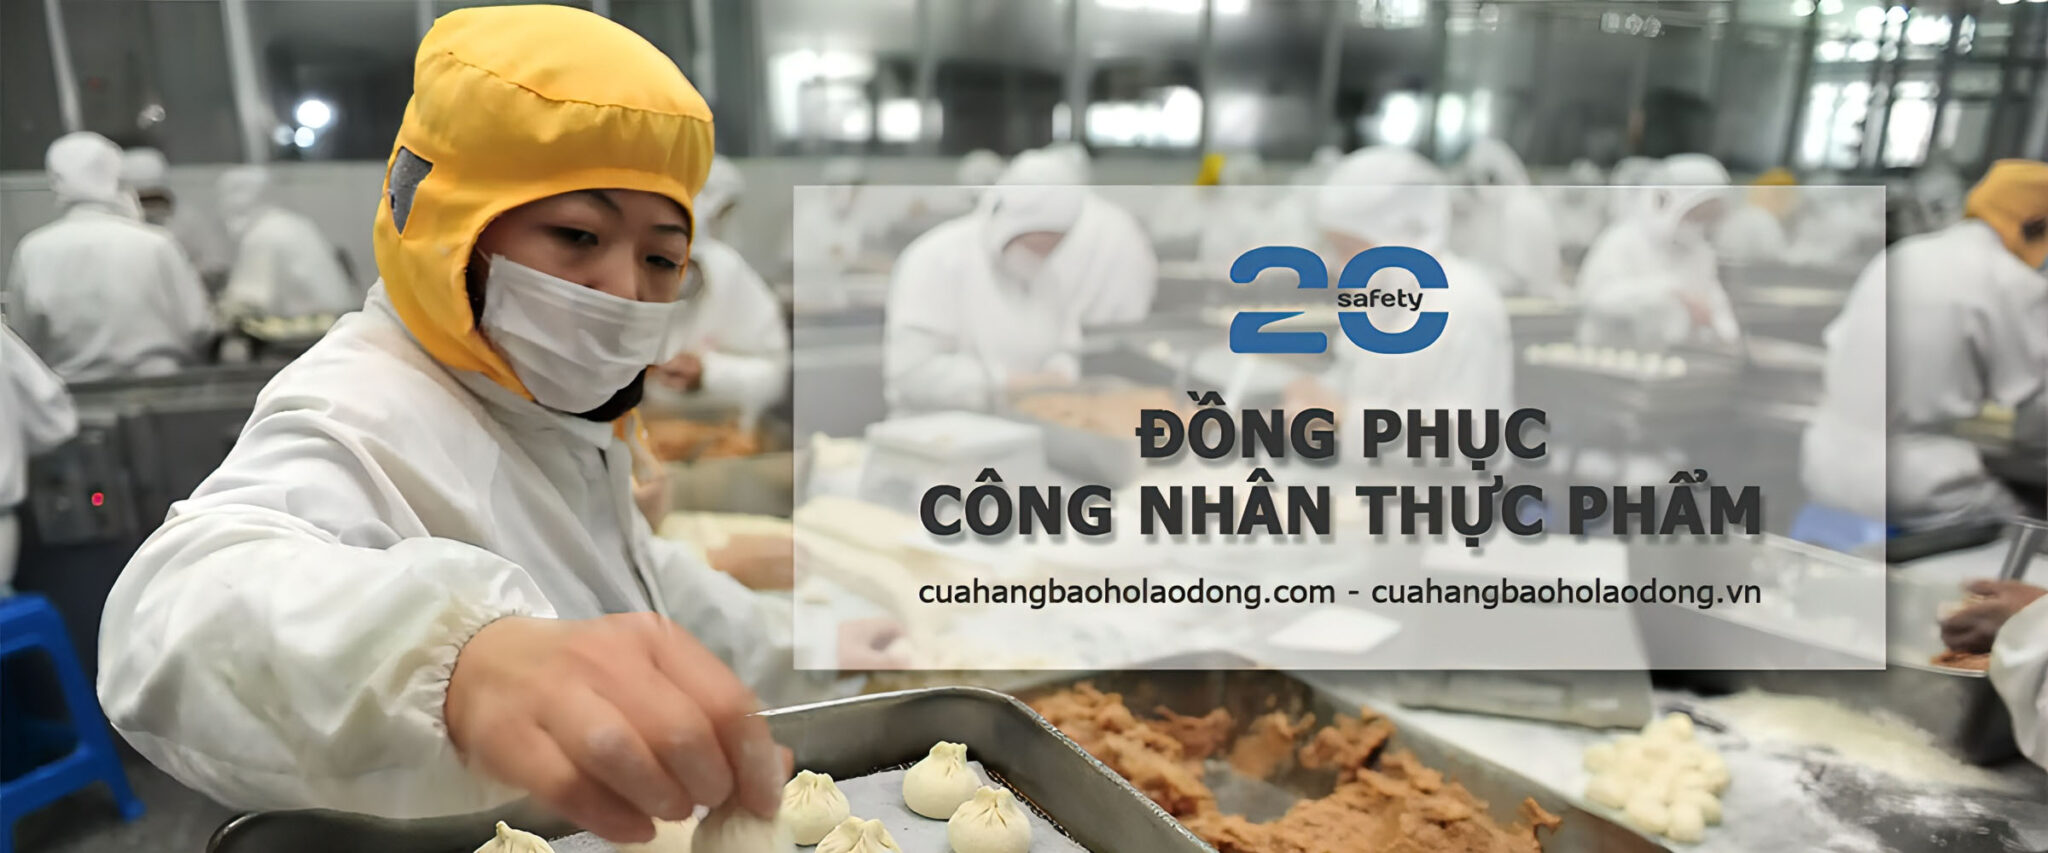 dong-phuc-cong-nhan-thuc-pham